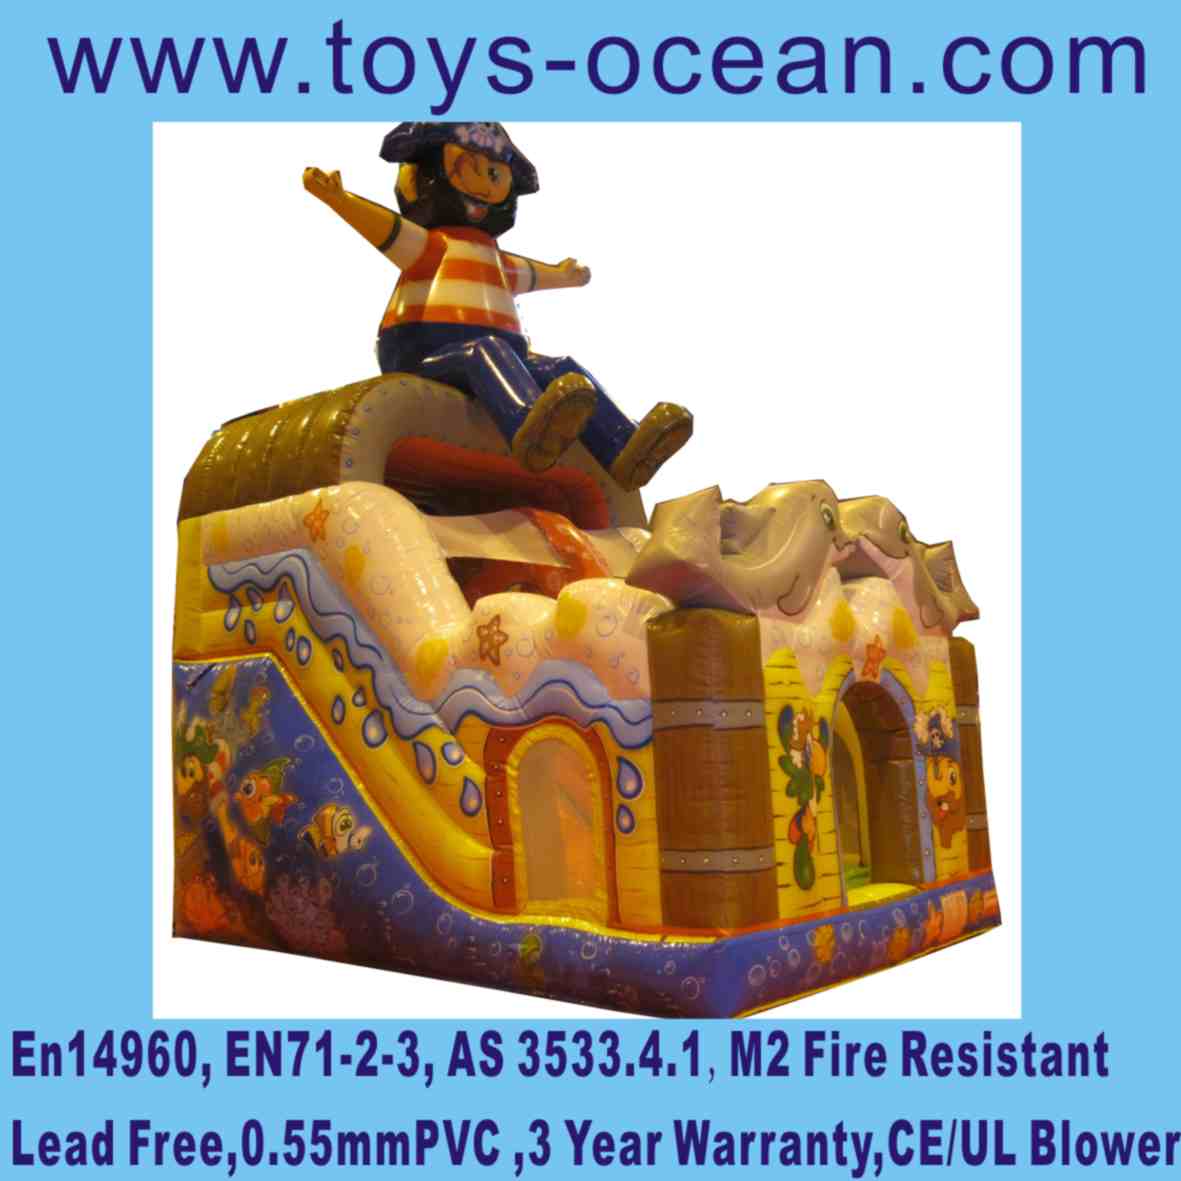 Toys-ocean amusement equipment co ltd 